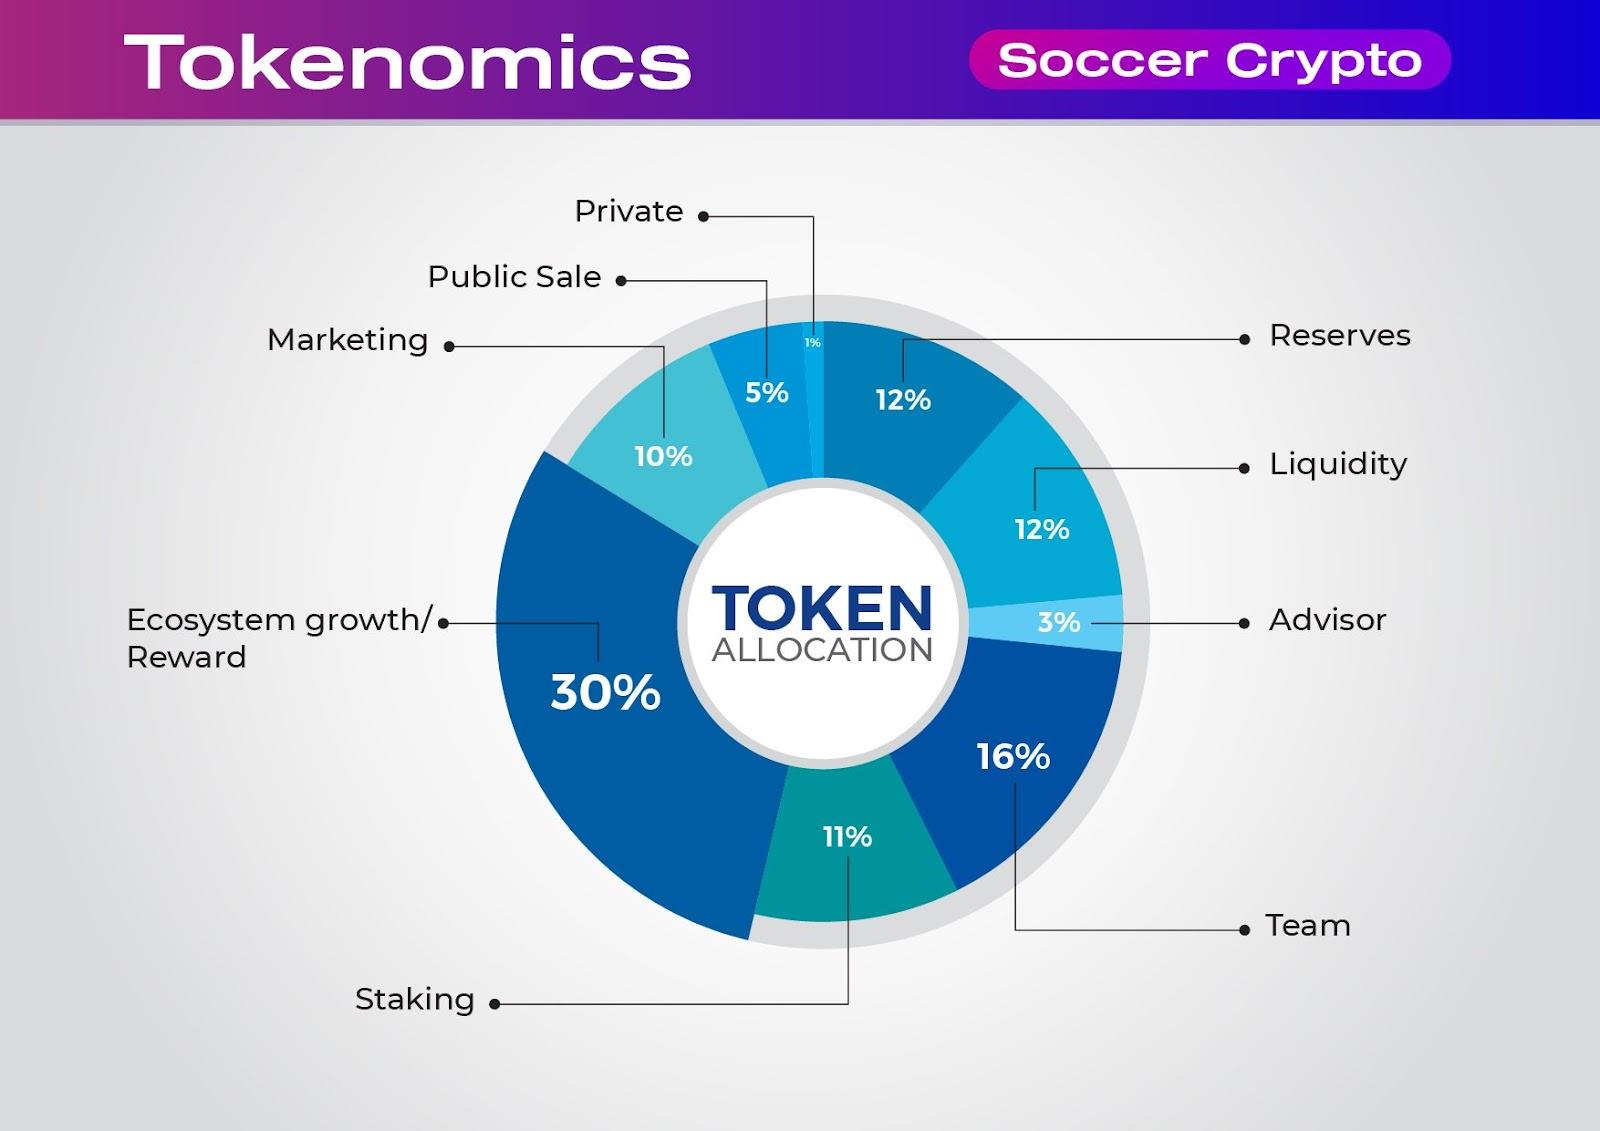 Soccer Crypto – โครงการที่มีศักยภาพสำหรับแฟนฟุตบอลและบล็อกเชน (Audit & KYC โดย SolidProof)